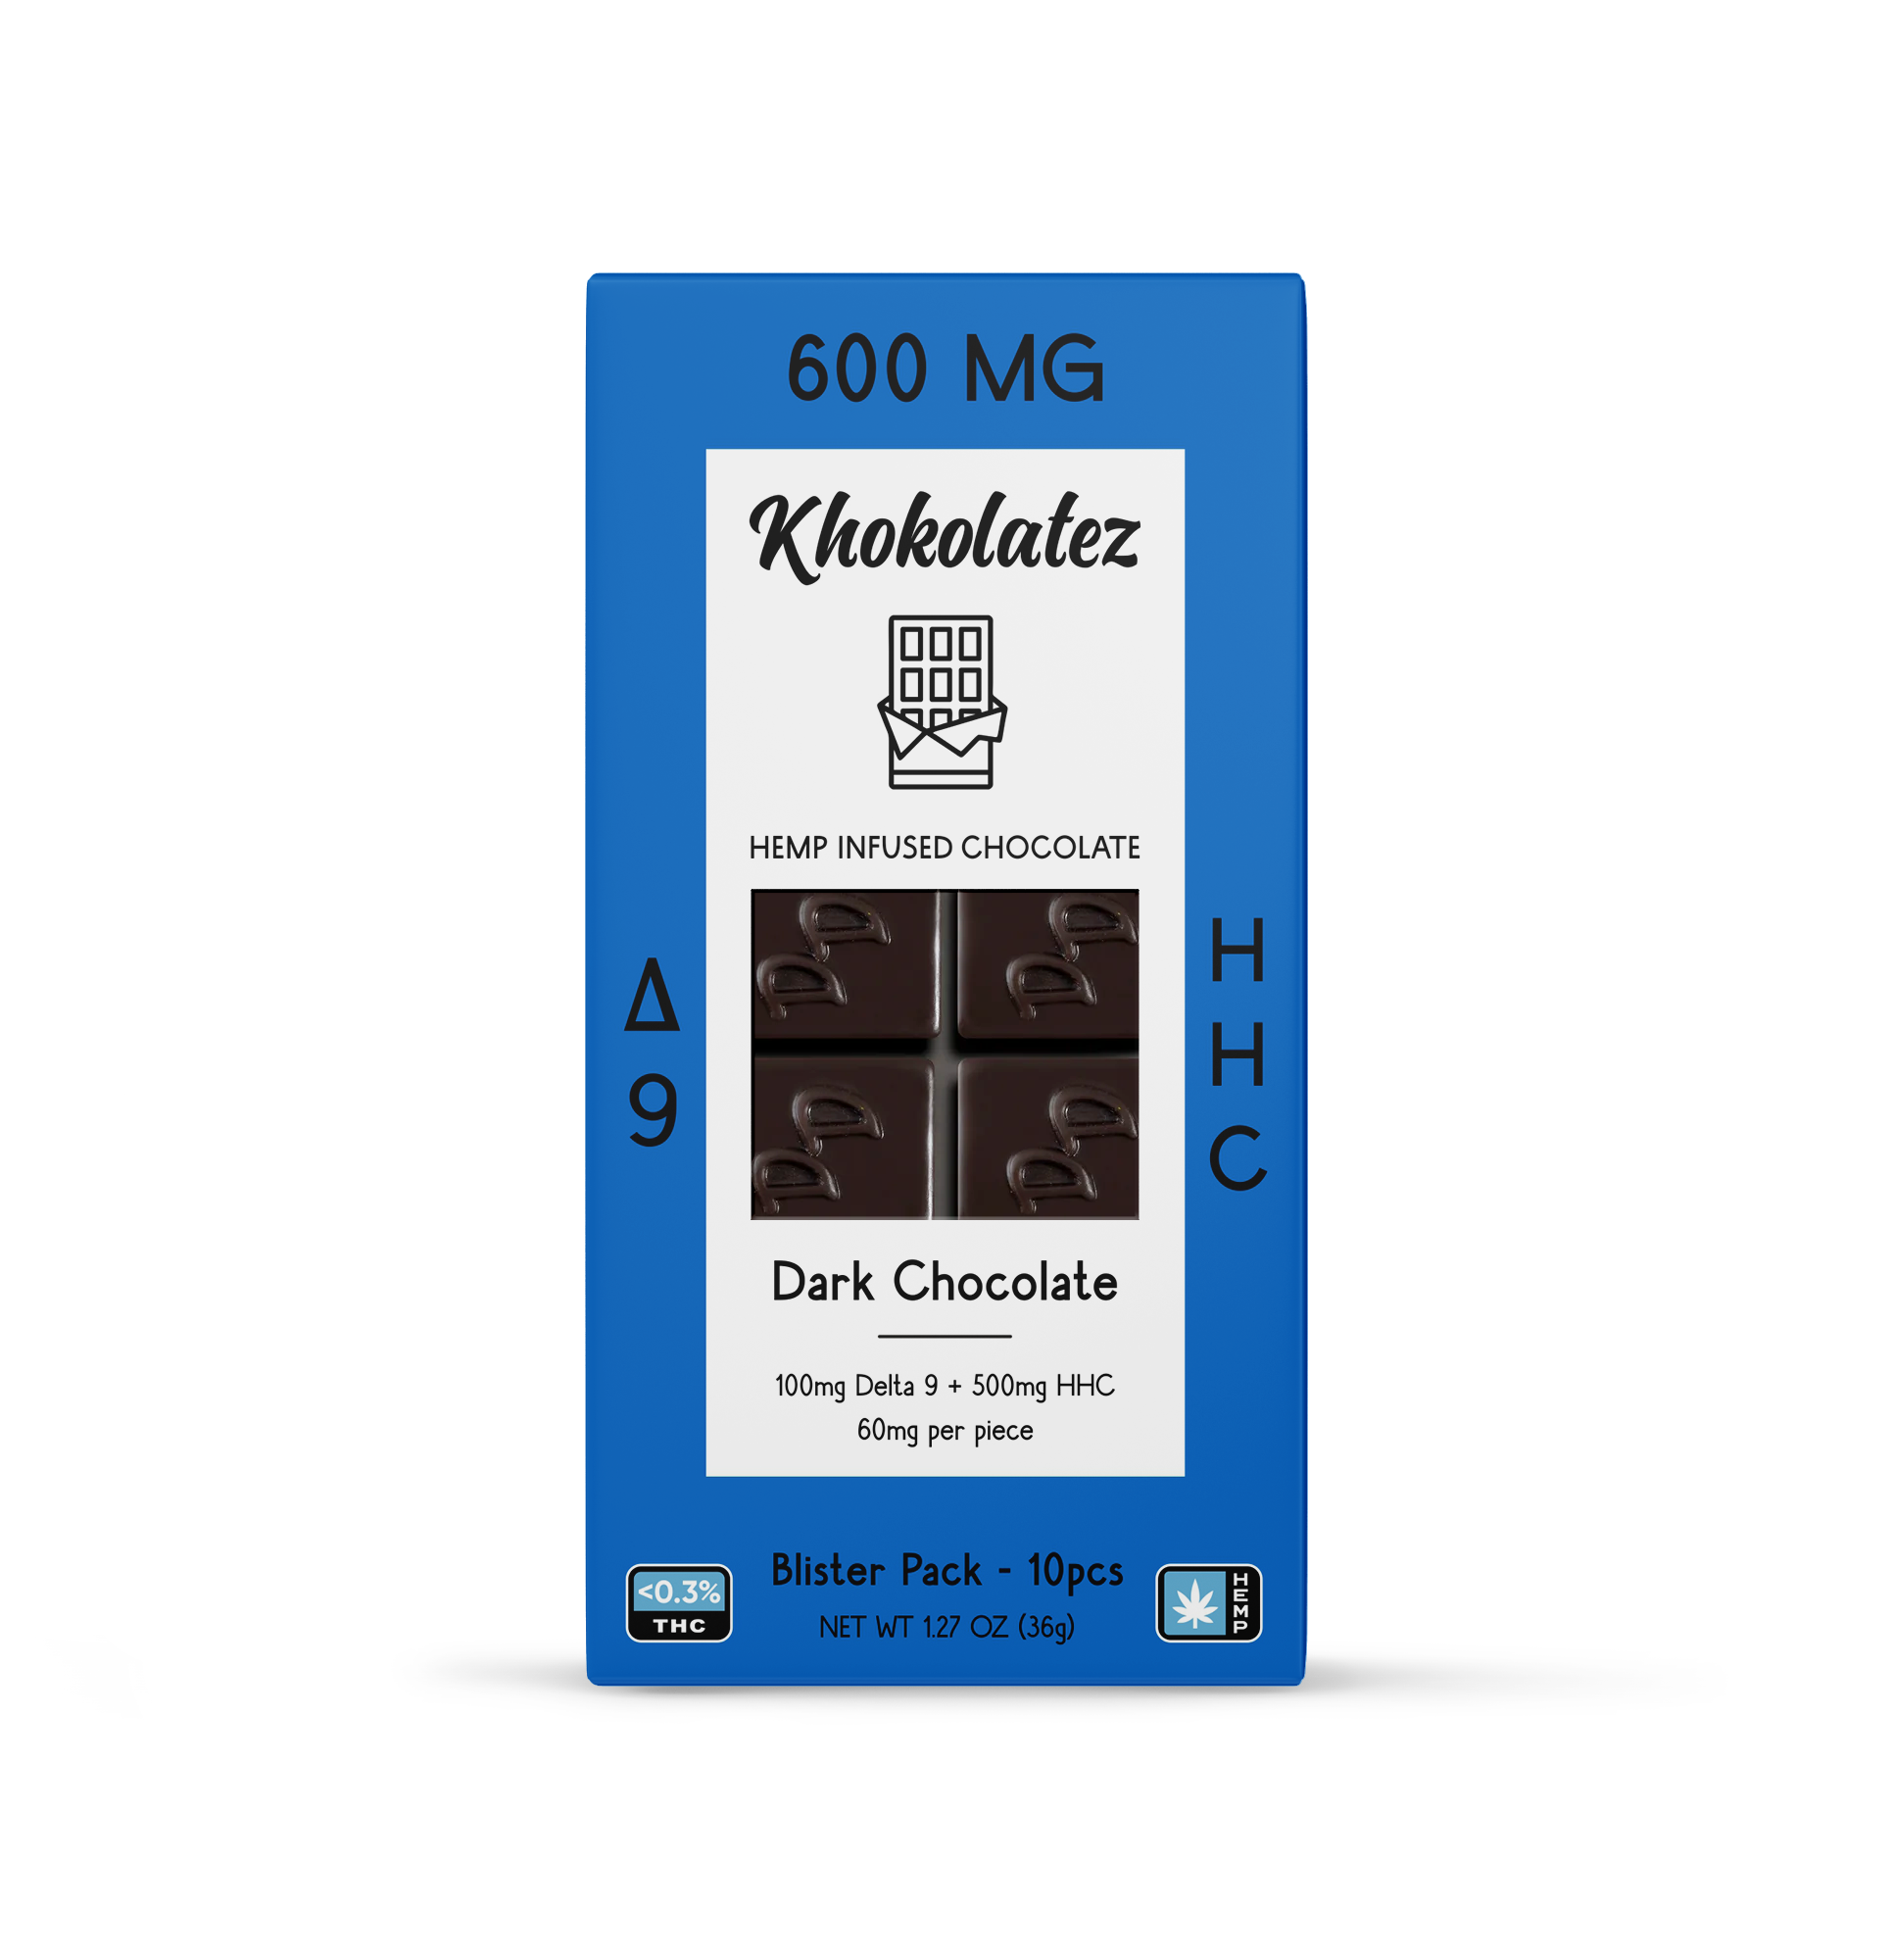 Khokolatez D9+HHC Chocolates - Box